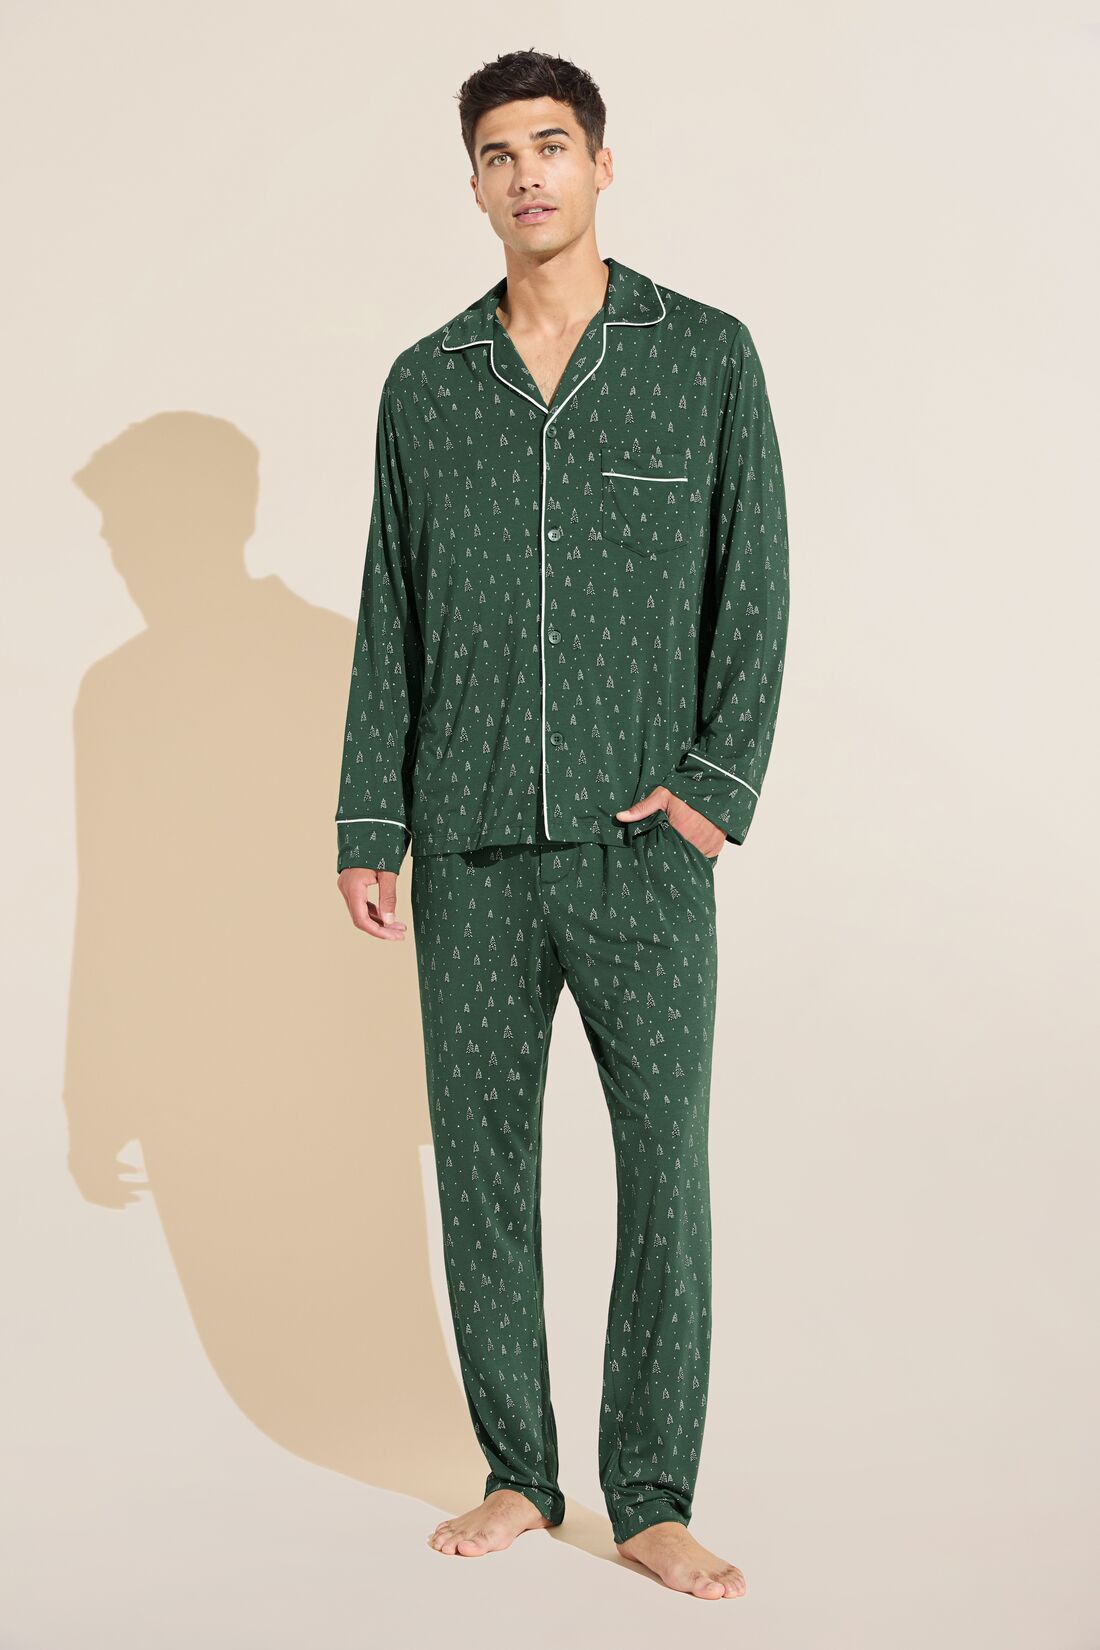 Men'Printed Men's Sleepware Pyjamas at Rs 350/piece